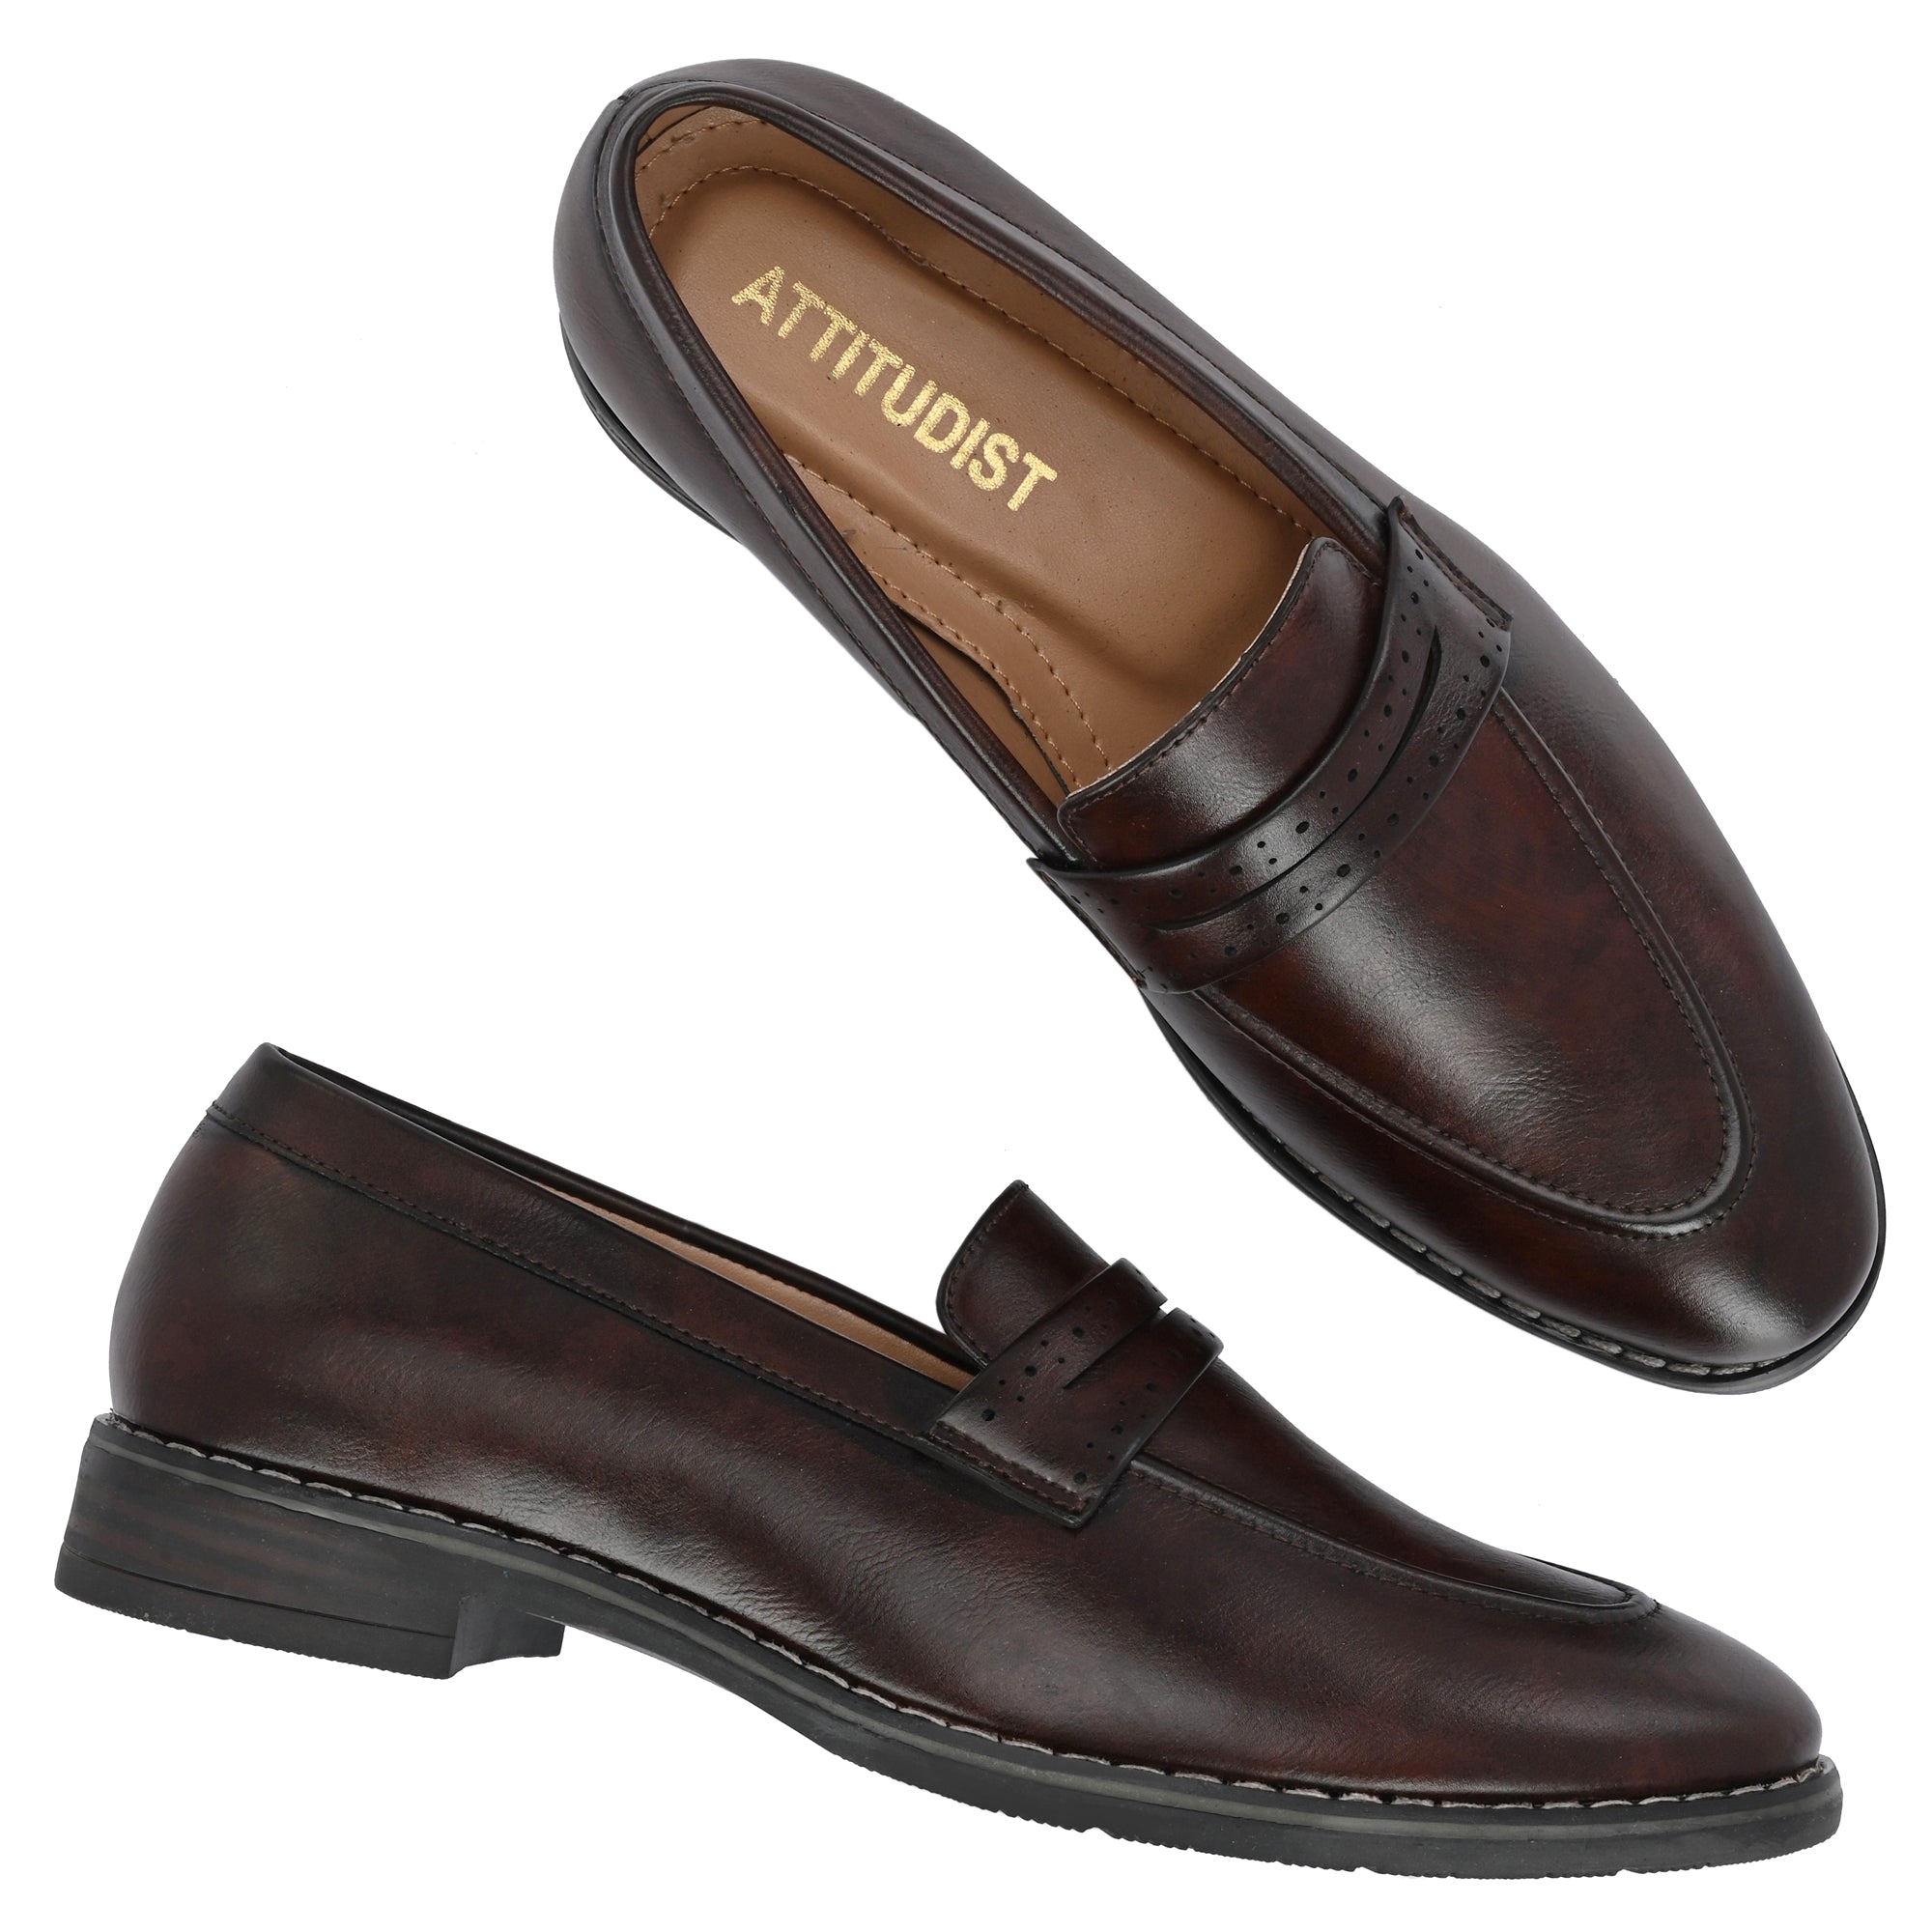 brown-loafers-attitudist-shoes-for-men-sp2b